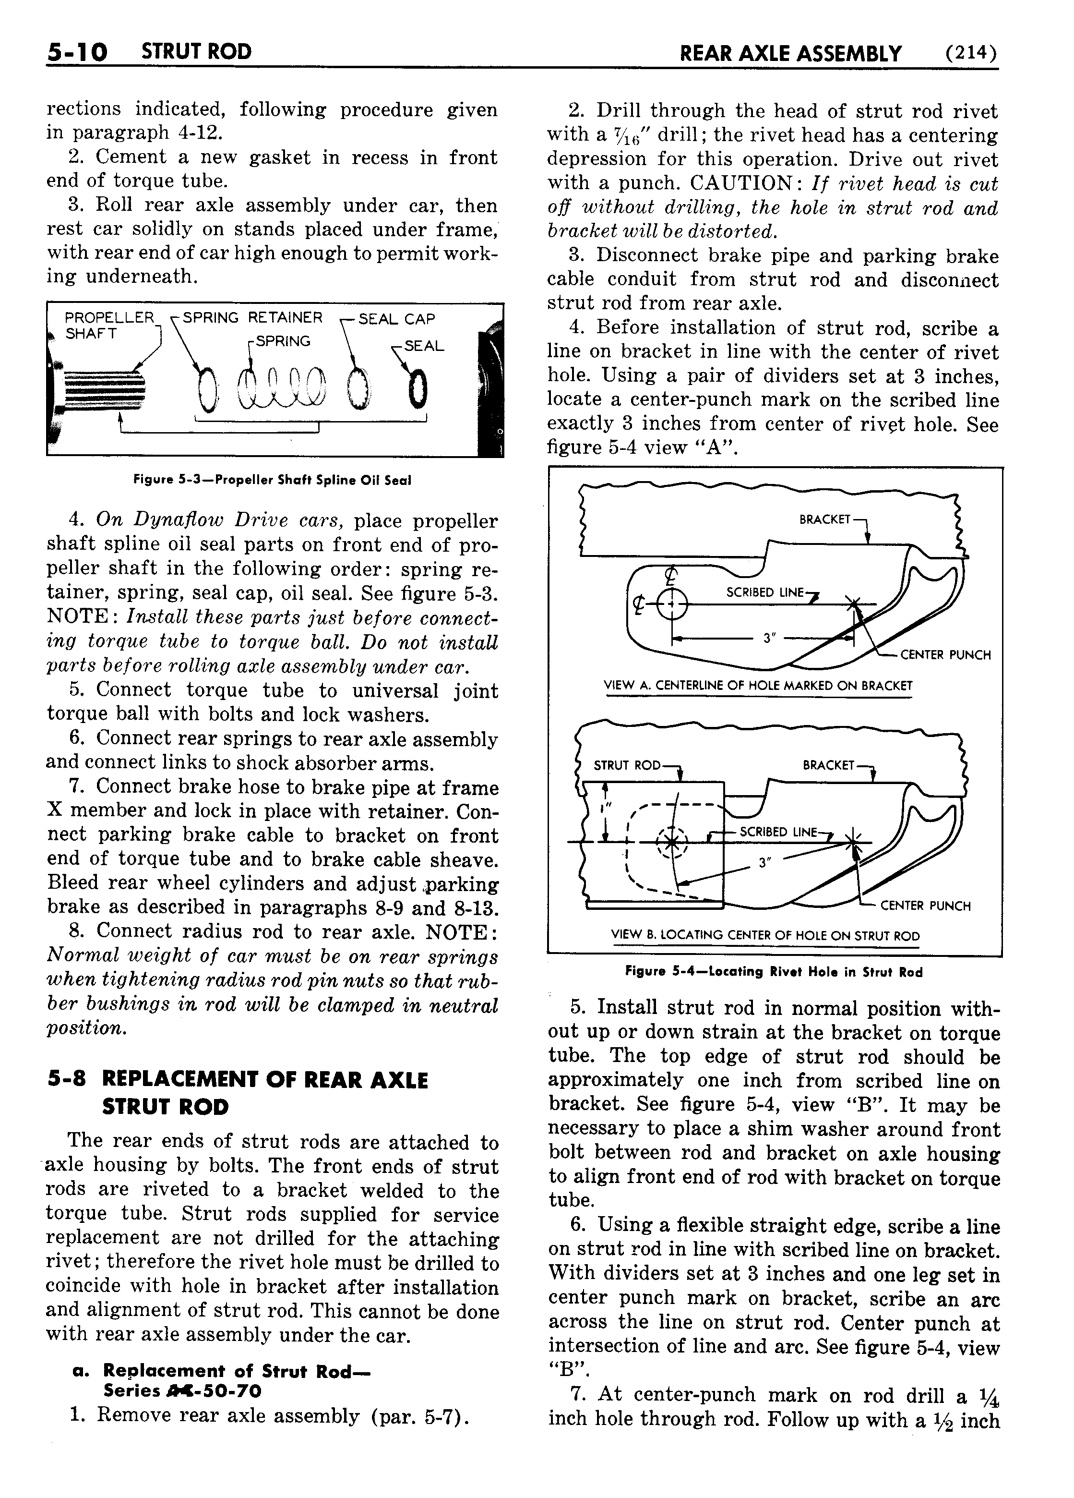 n_06 1951 Buick Shop Manual - Rear Axle-010-010.jpg